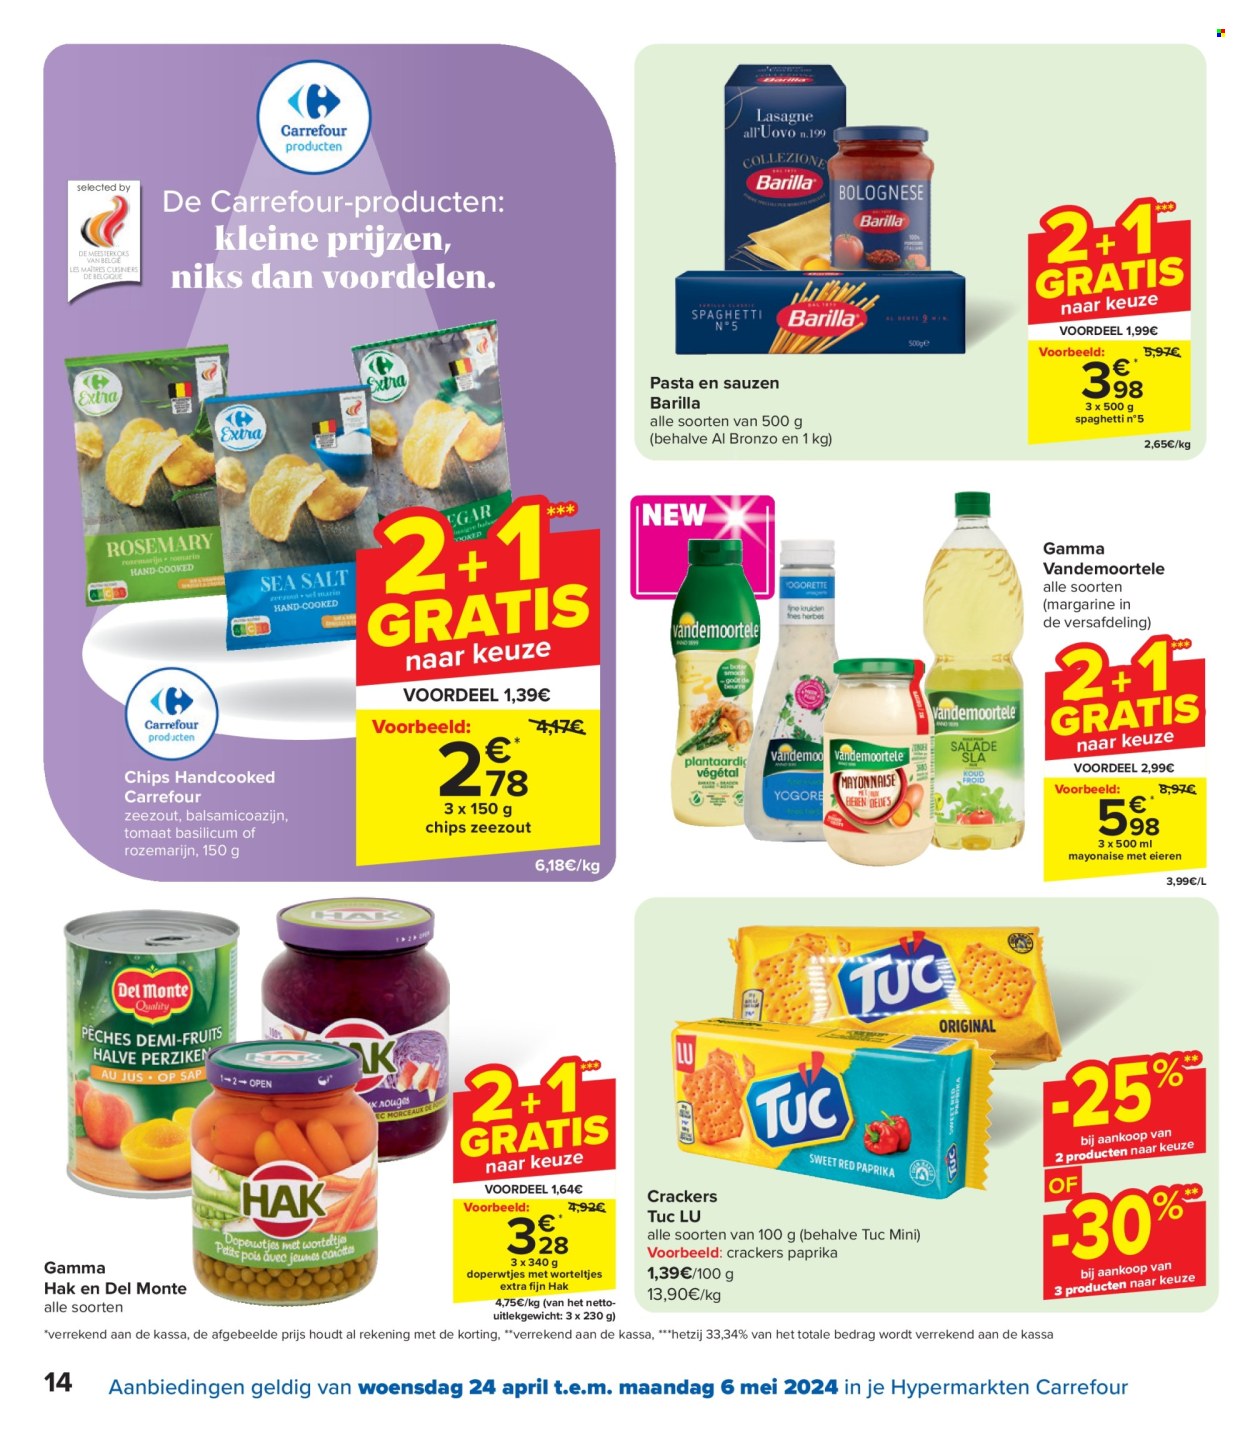 thumbnail - Catalogue Carrefour hypermarkt - 24/04/2024 - 06/05/2024 - Produits soldés - spaghetti, margarine, LU, chips, crackers, TUC, Barilla. Page 14.